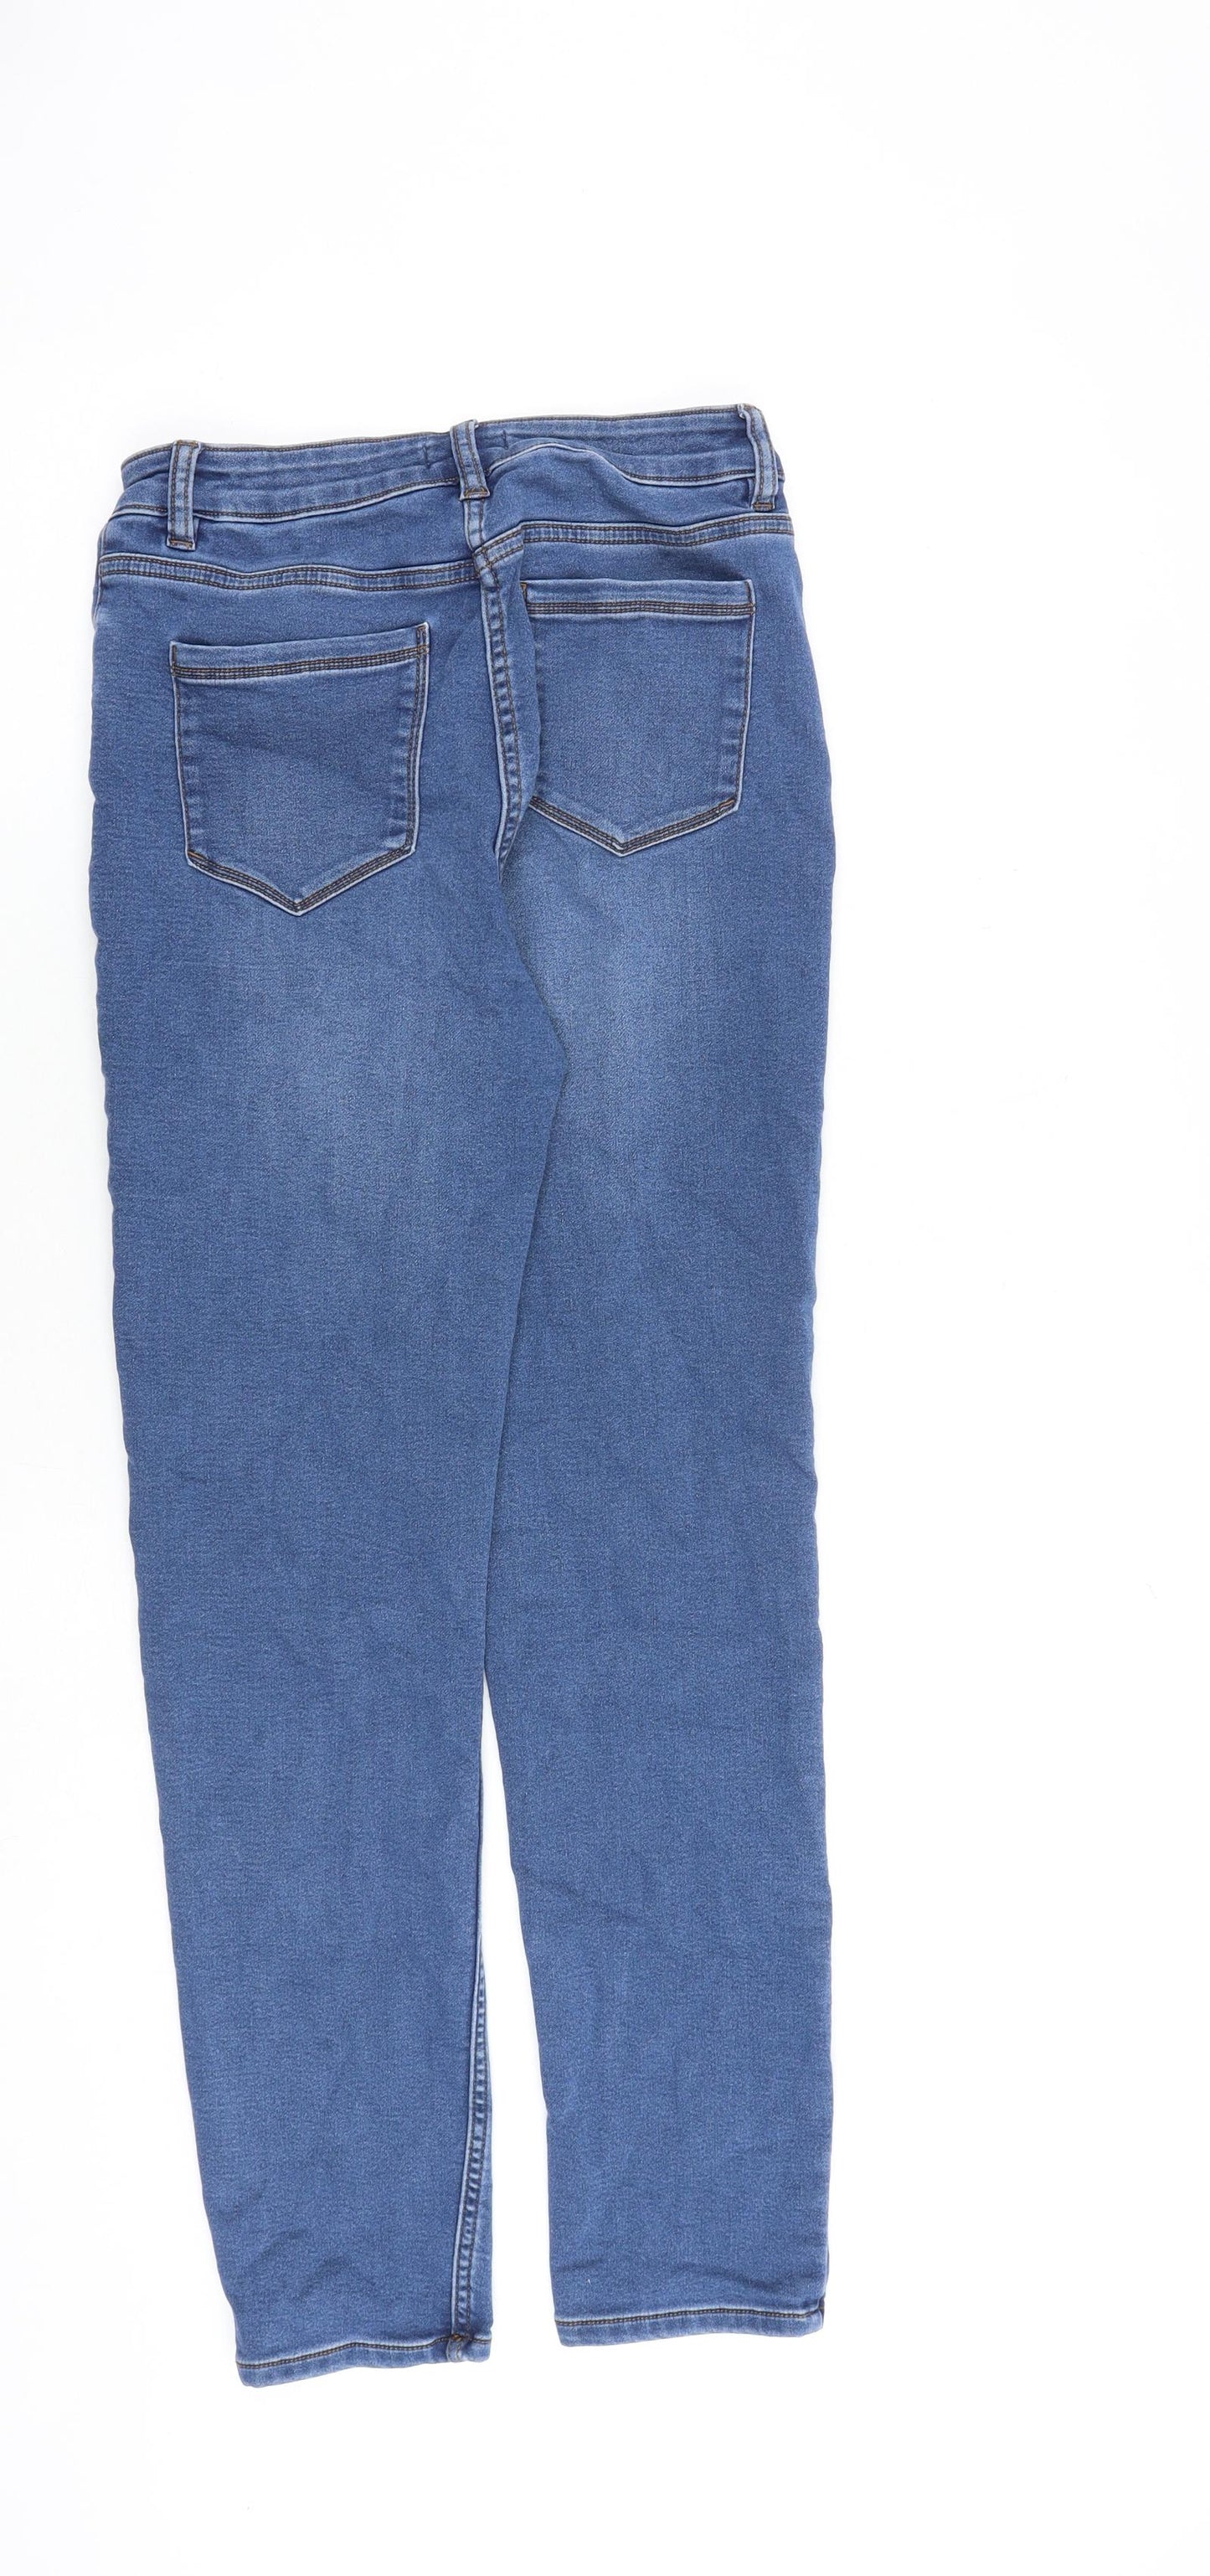 Papaya Womens Blue Cotton Skinny Jeans Size 10 L29 in Regular Zip